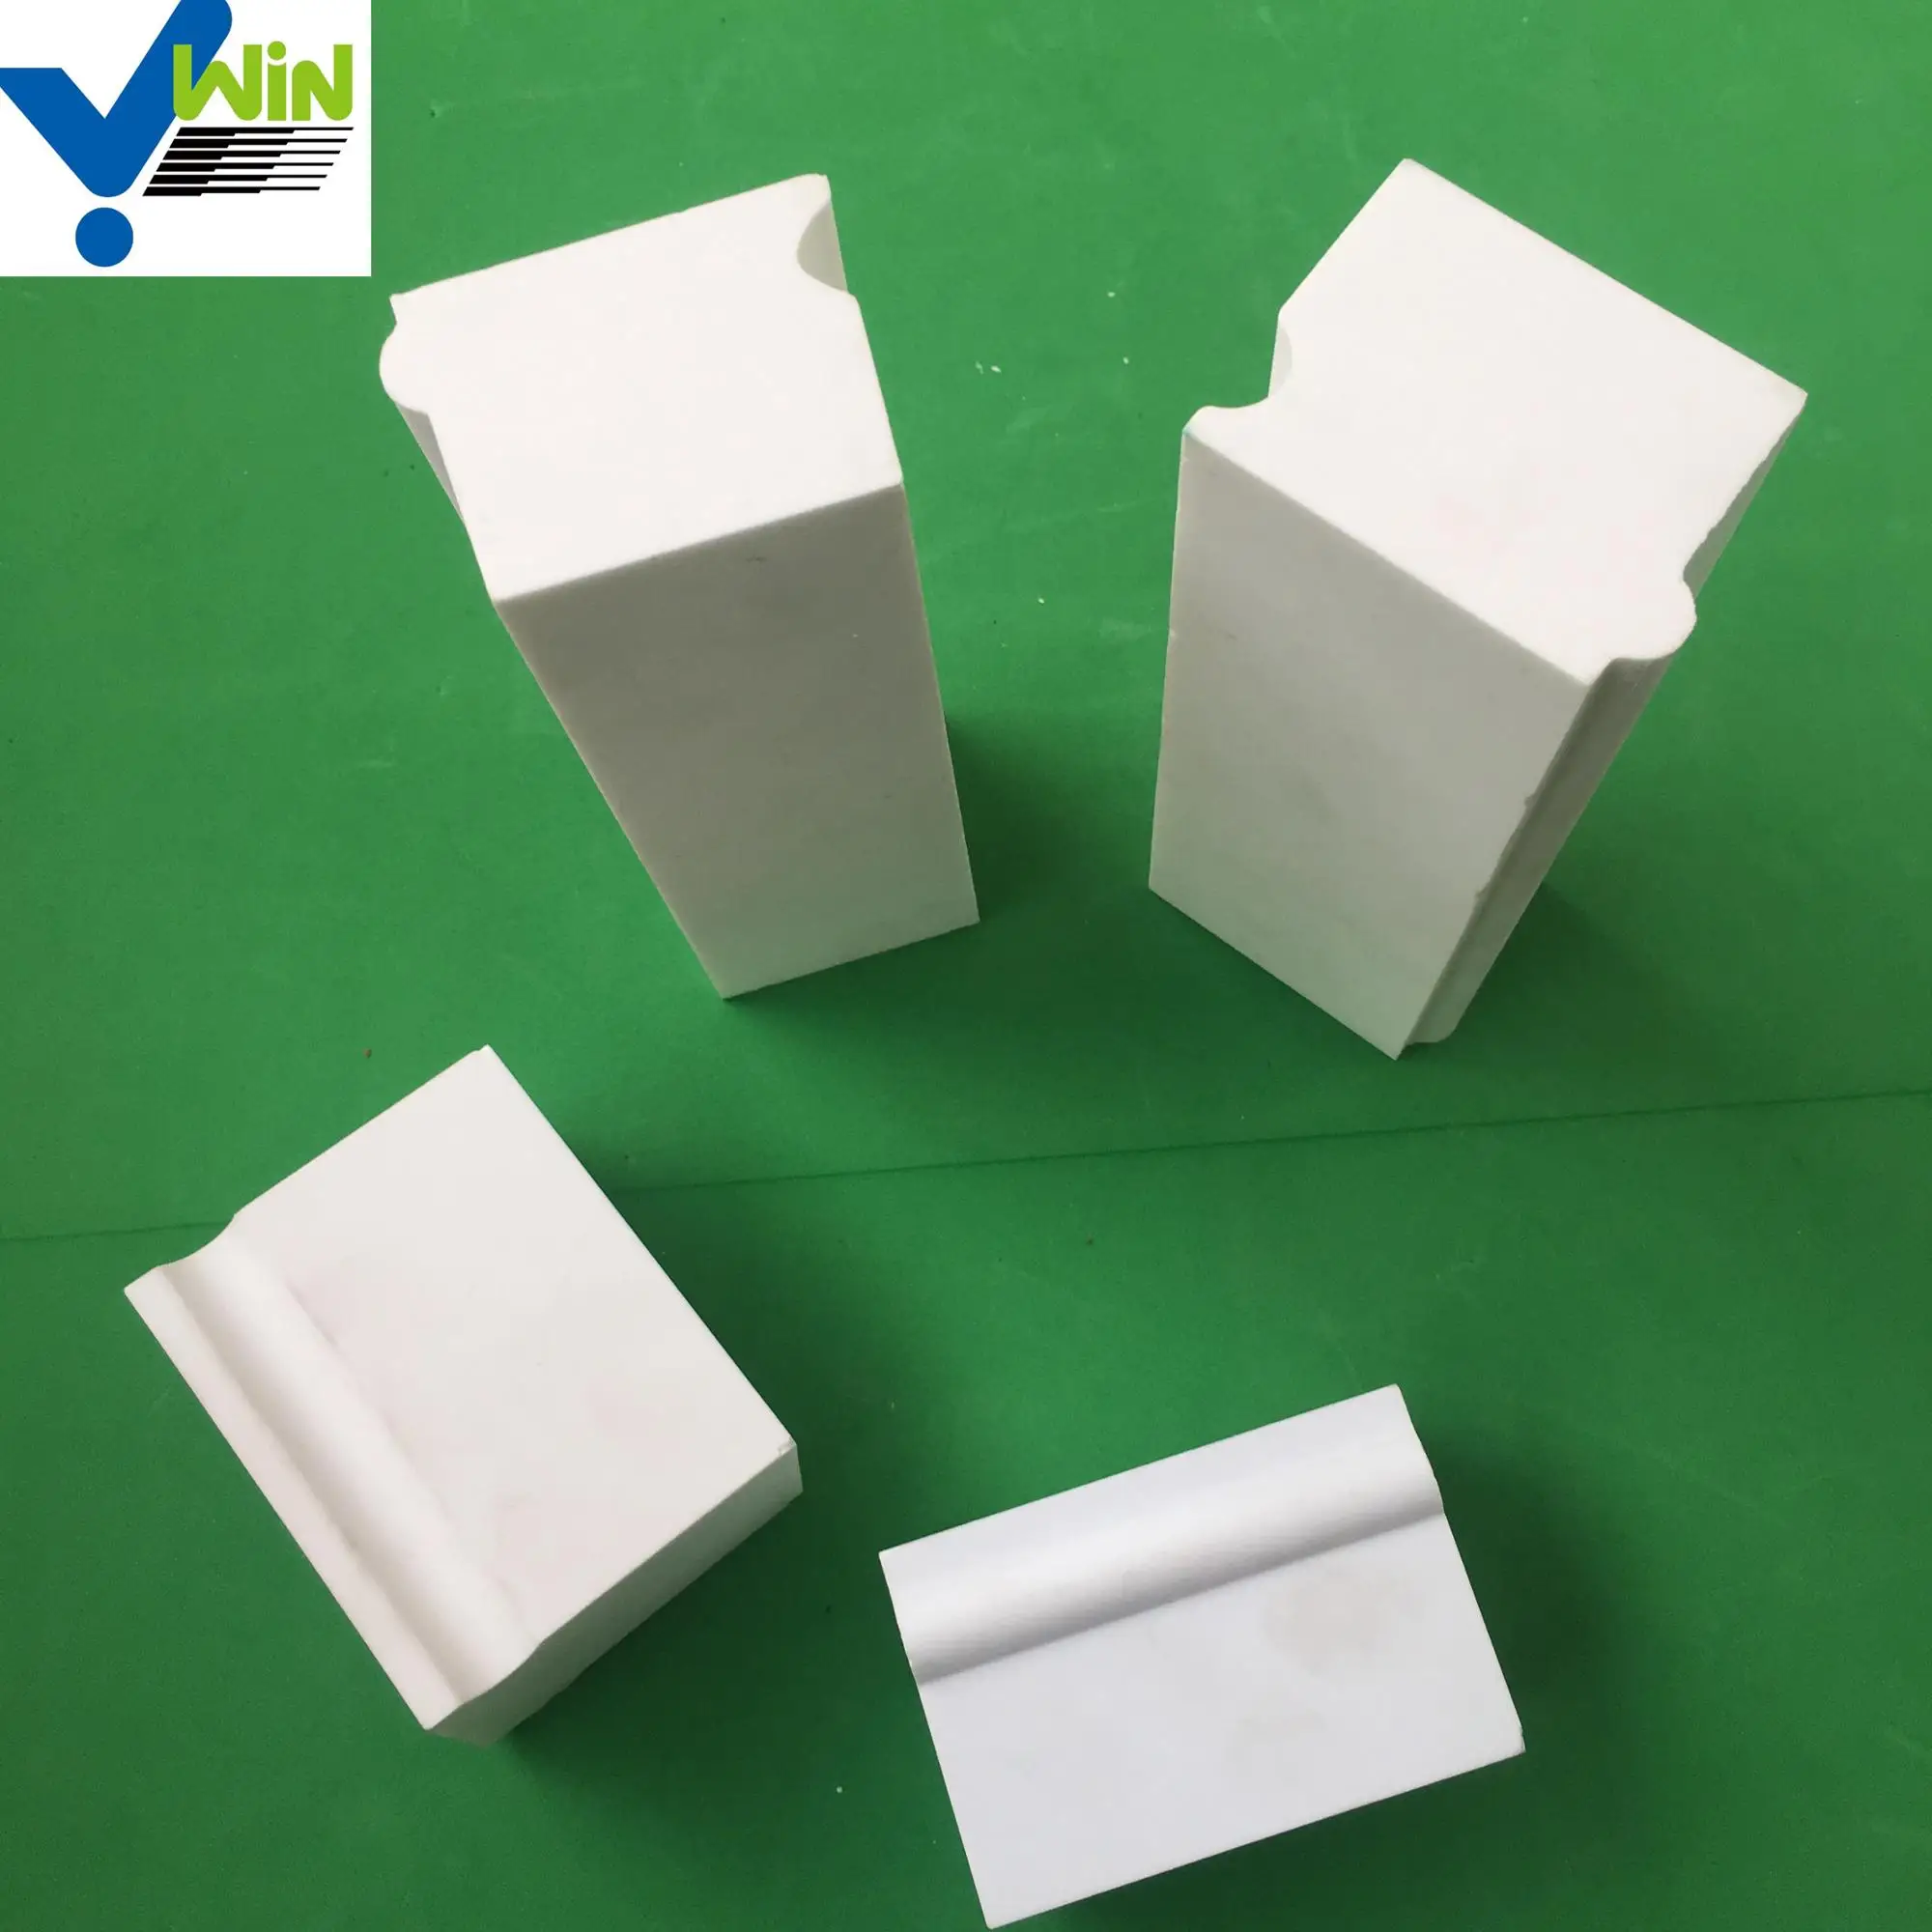 High temperature resistance alumina oxide ceramic tile factories in china